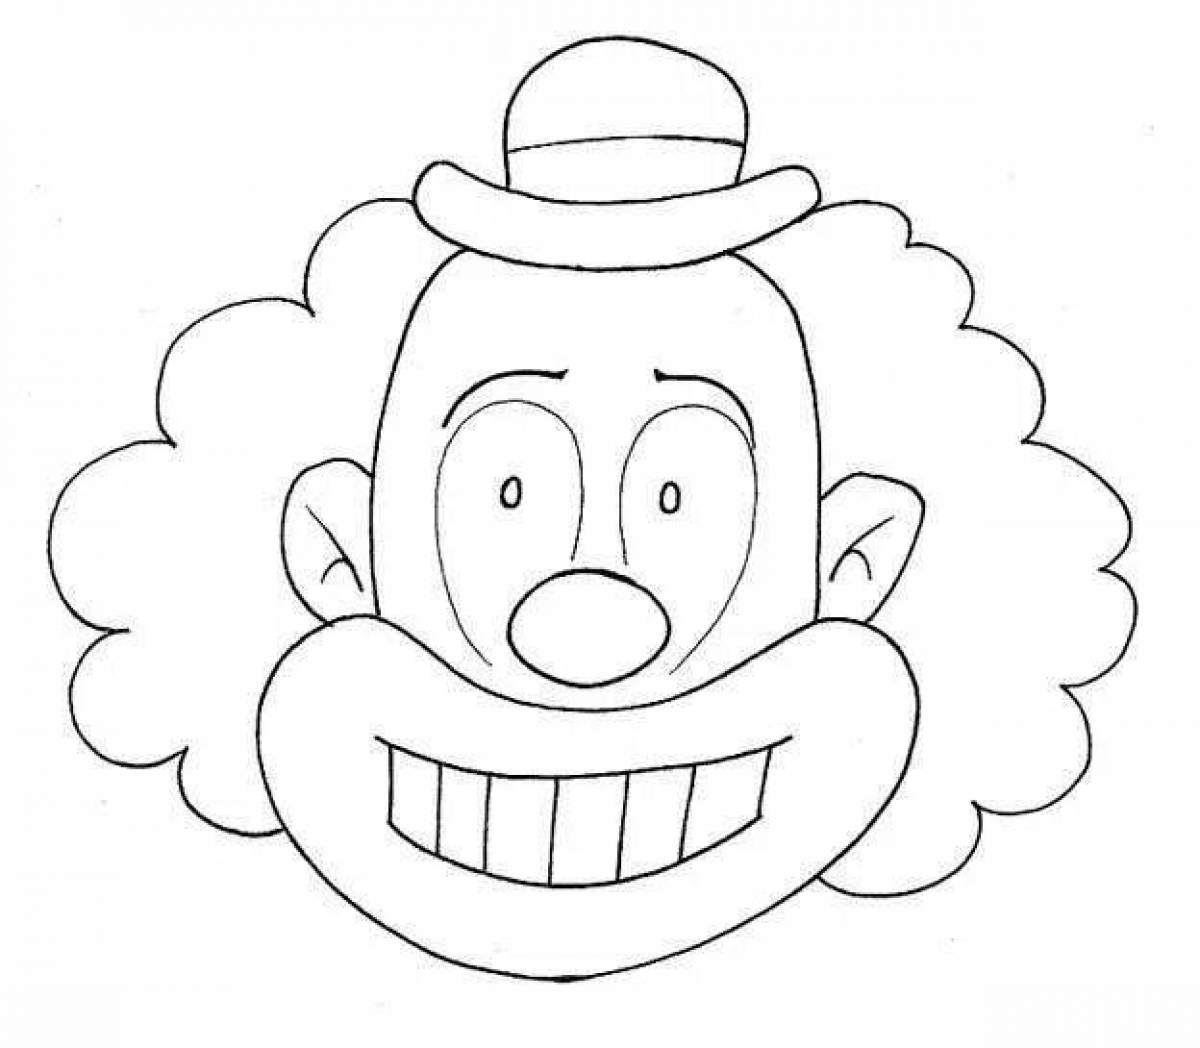 Fancy clown face coloring page